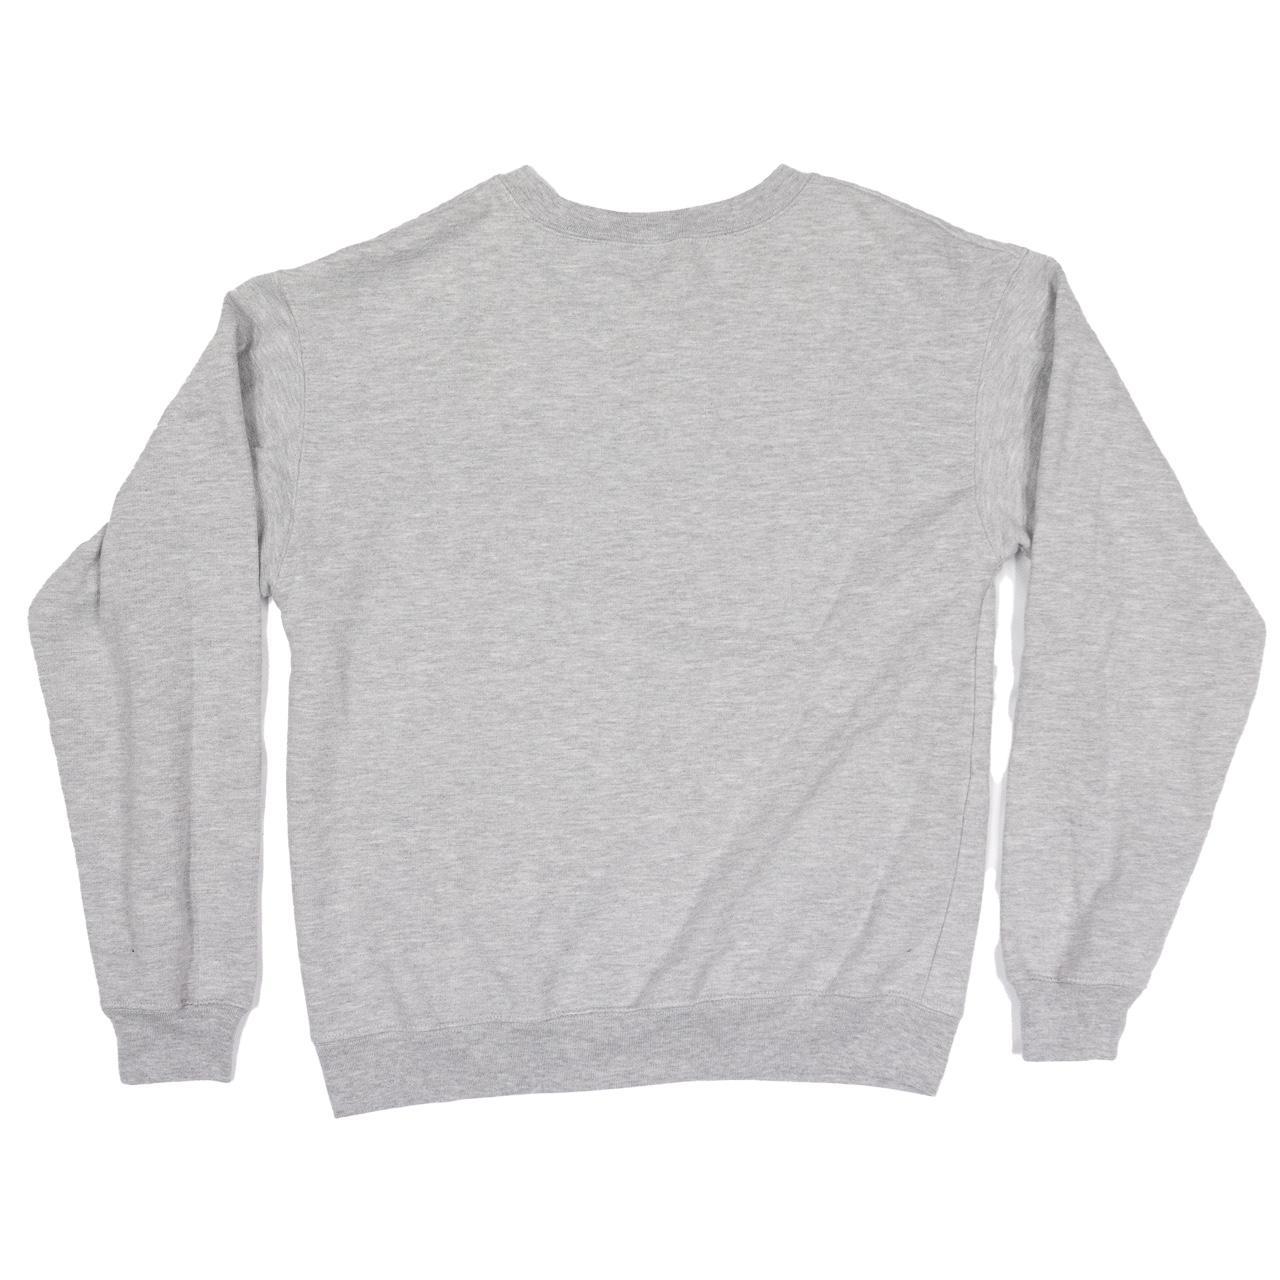 Kodak Men's Grey Sweatshirt (2)